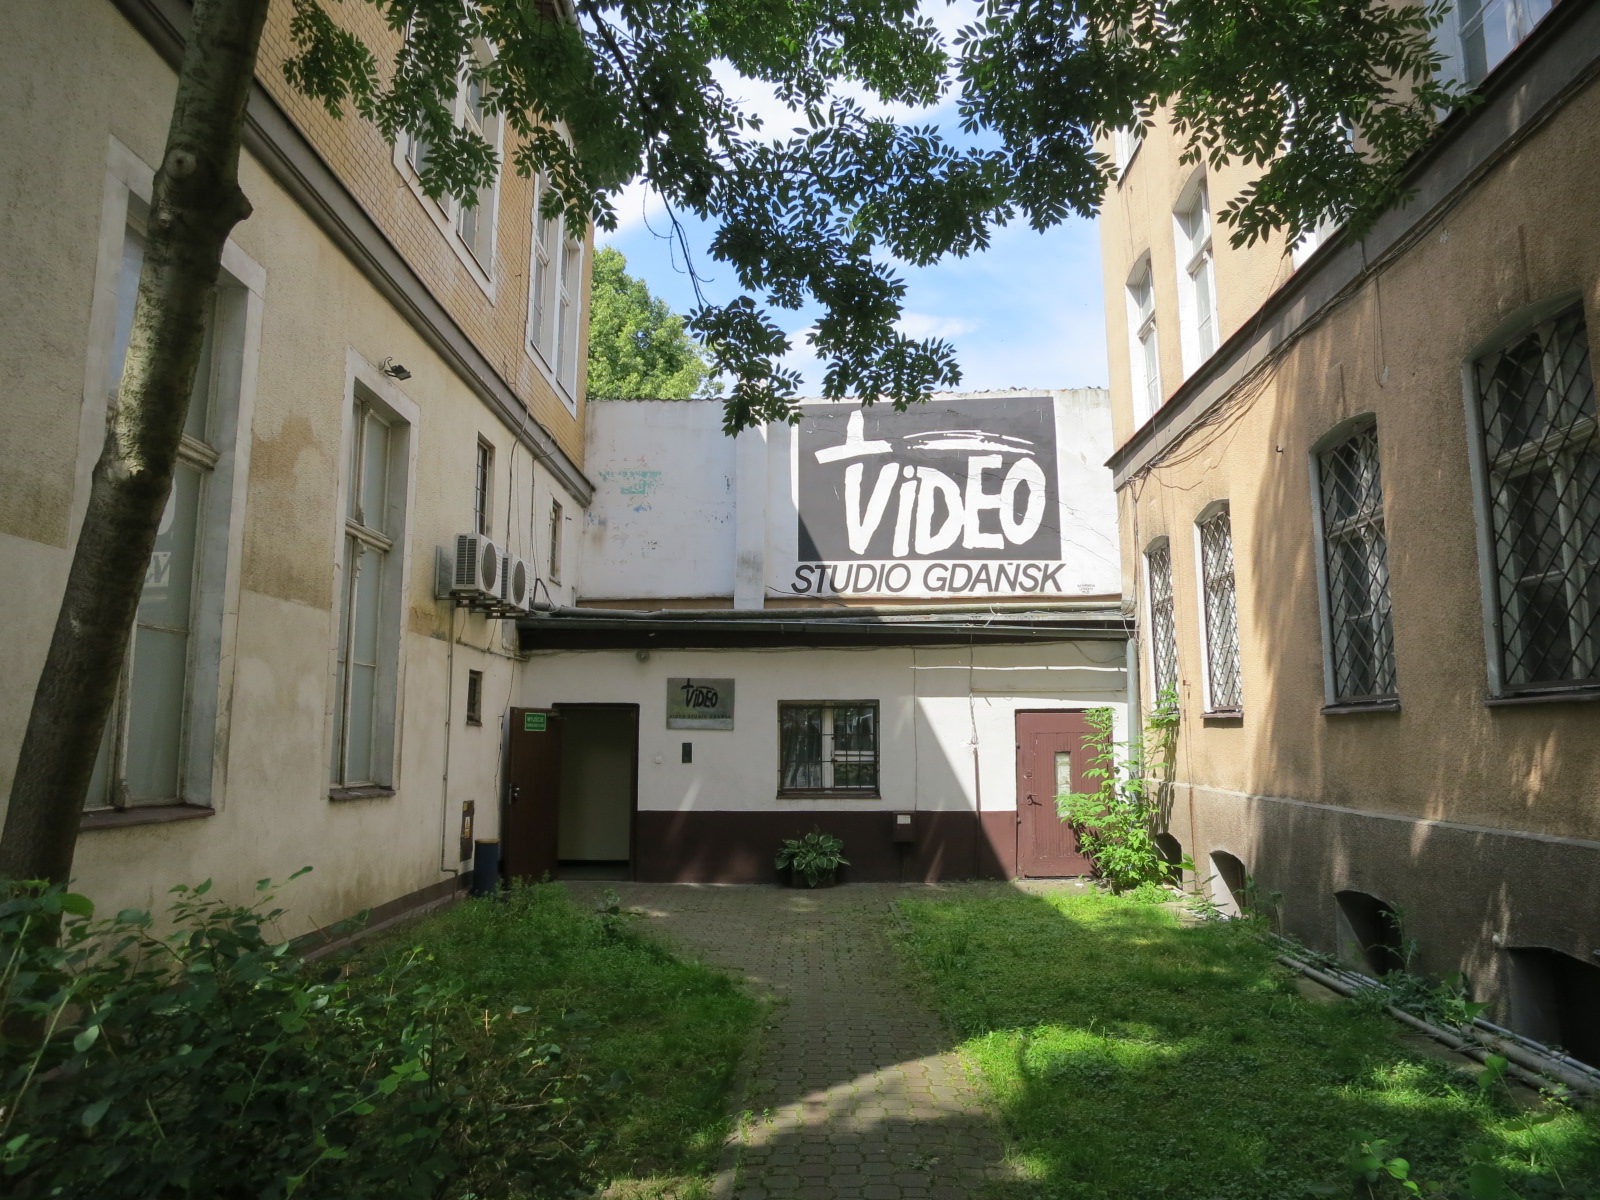 The headquarters of Video Studio Gdansk.